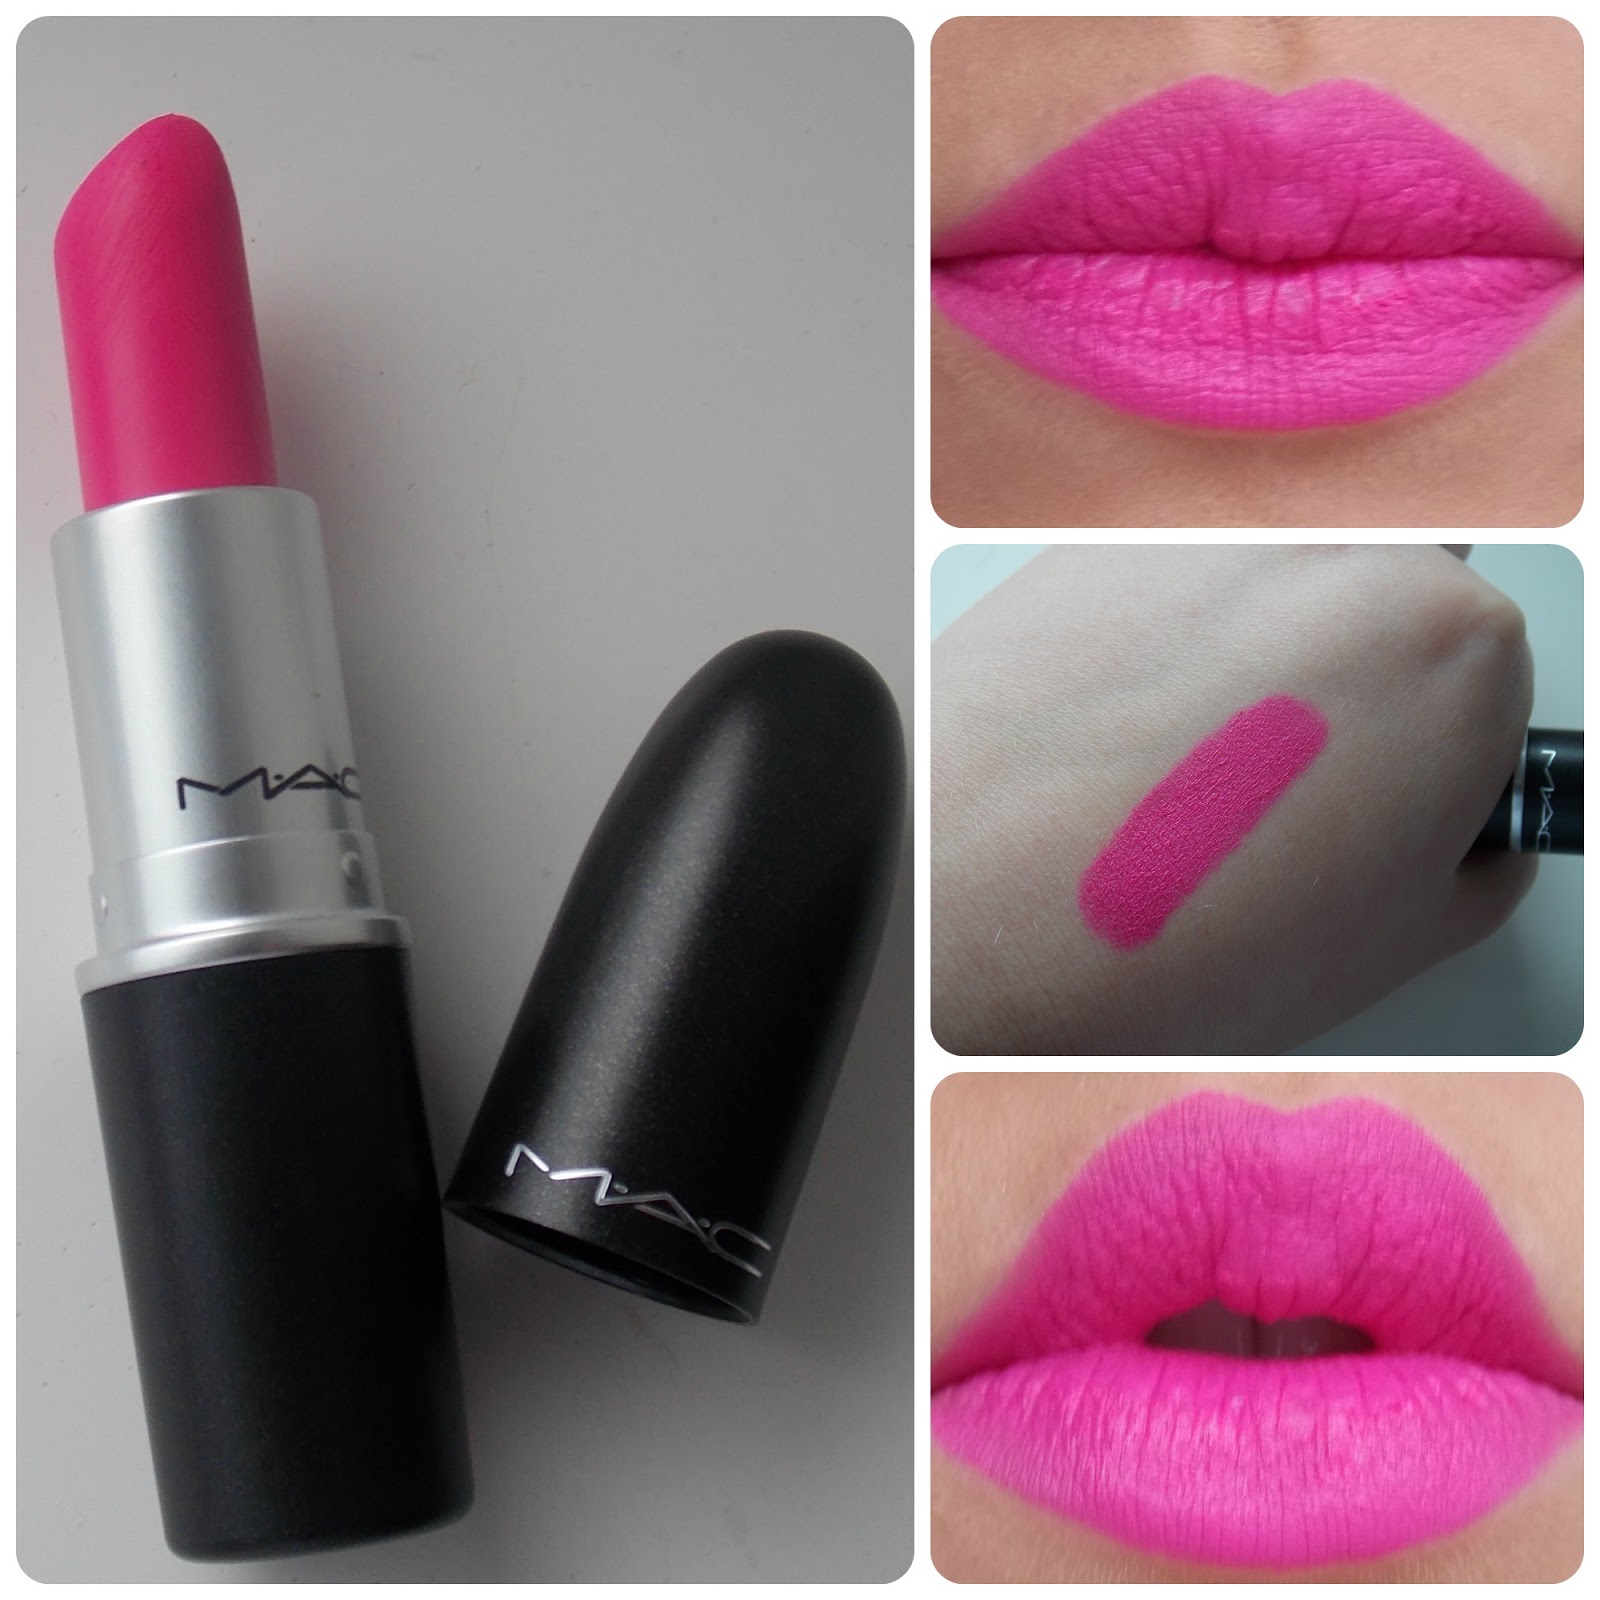 Beauty - Mac Candy Yum Yum Lipstick Review.